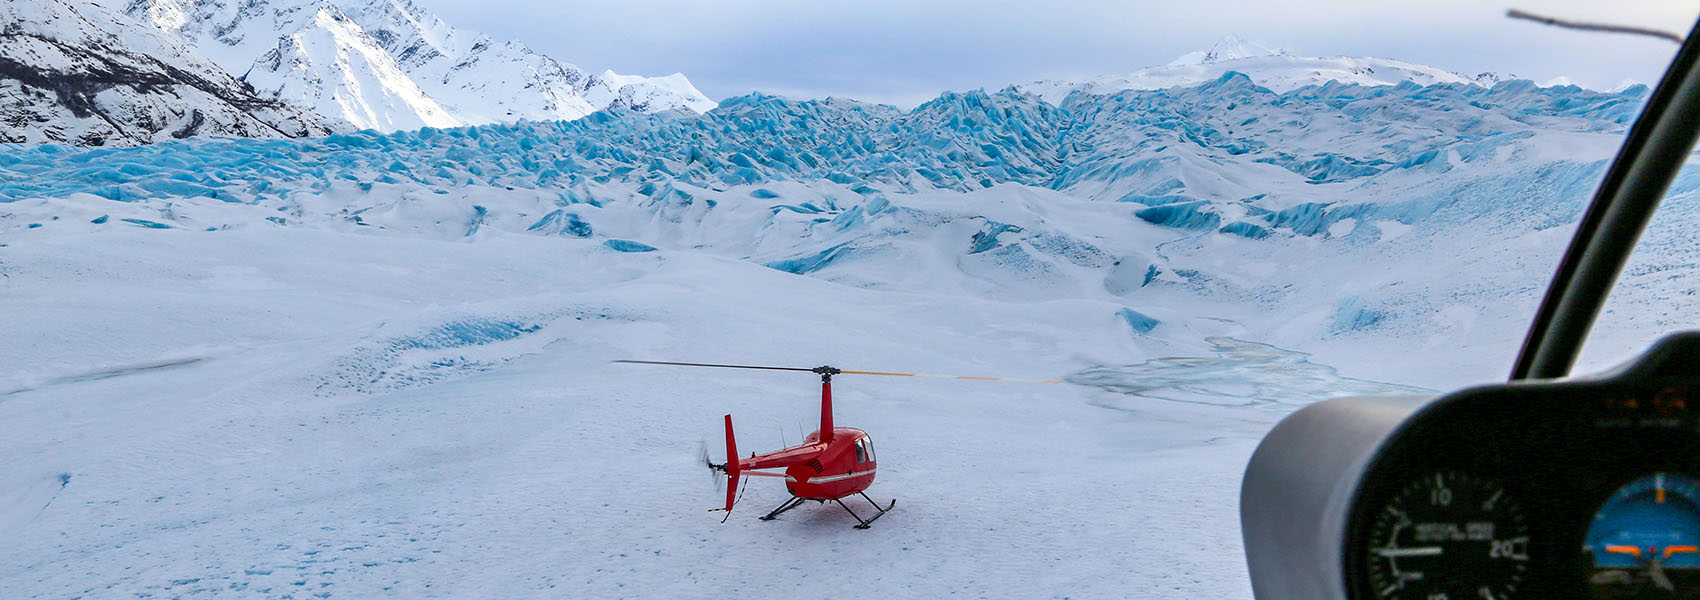 Helicopter on glacier